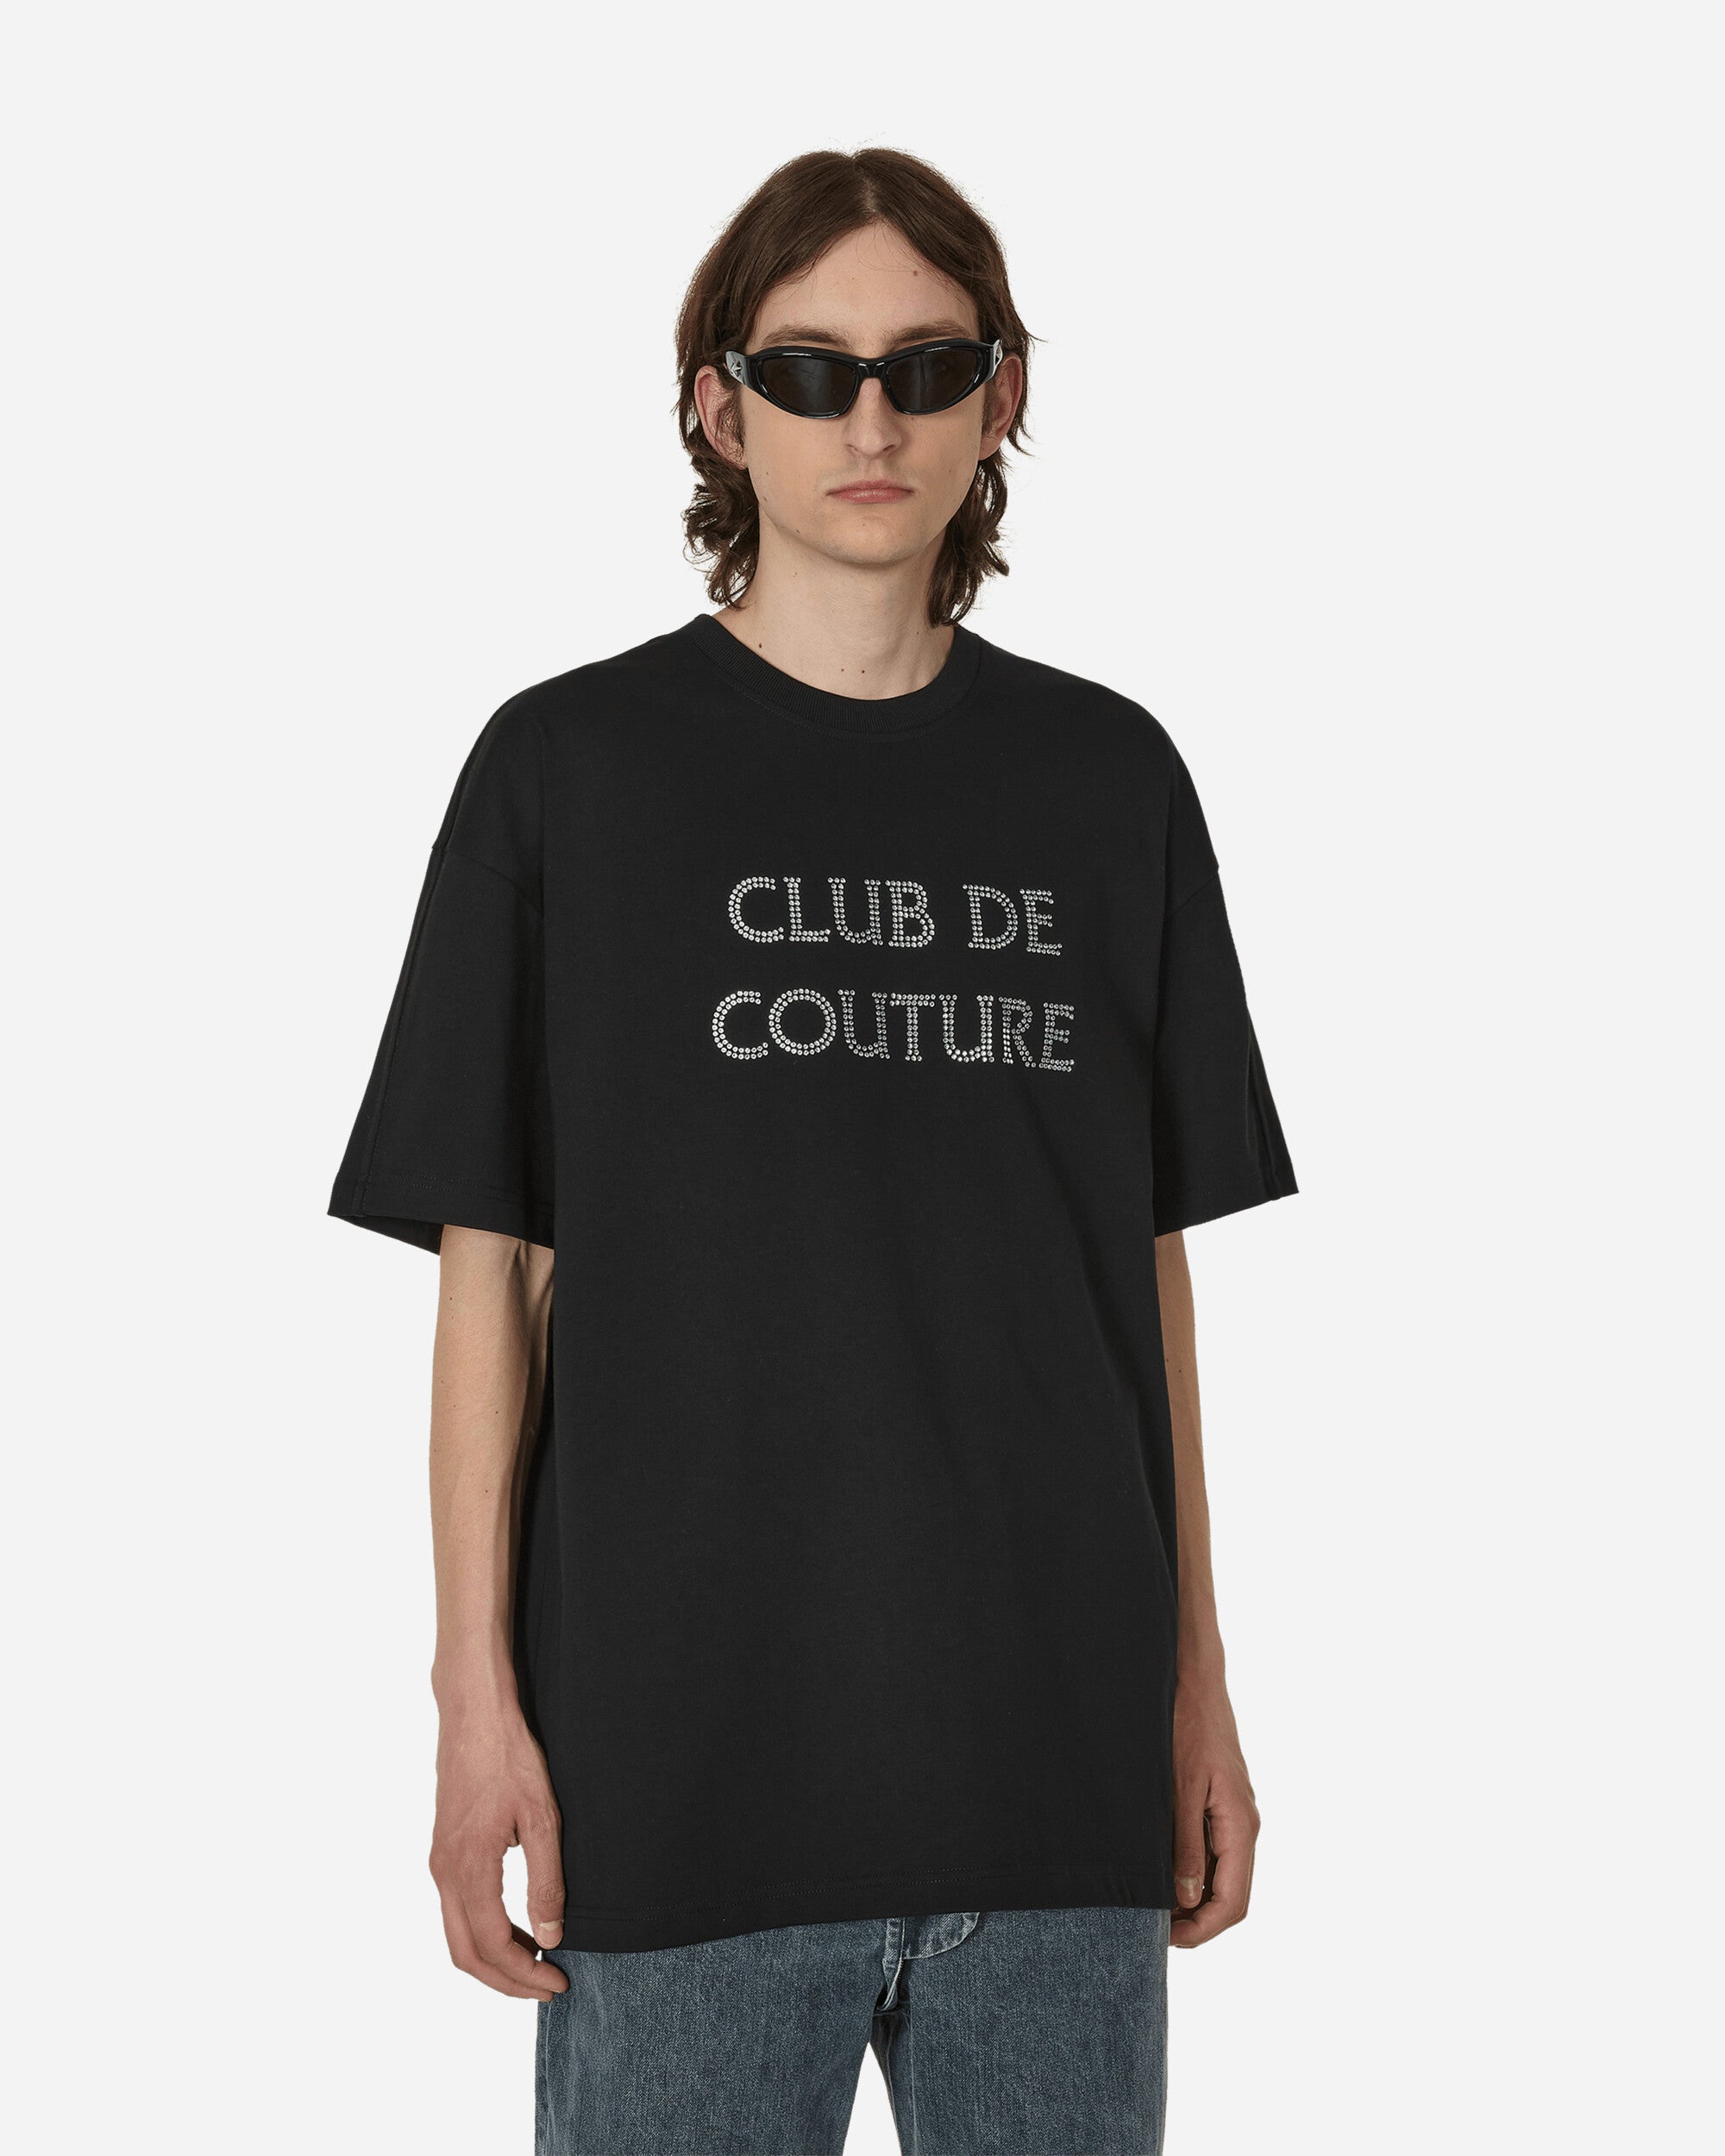 ANONYMOUS CLUB CLUB DE COUTURE Tシャツ - www.flexio.cz